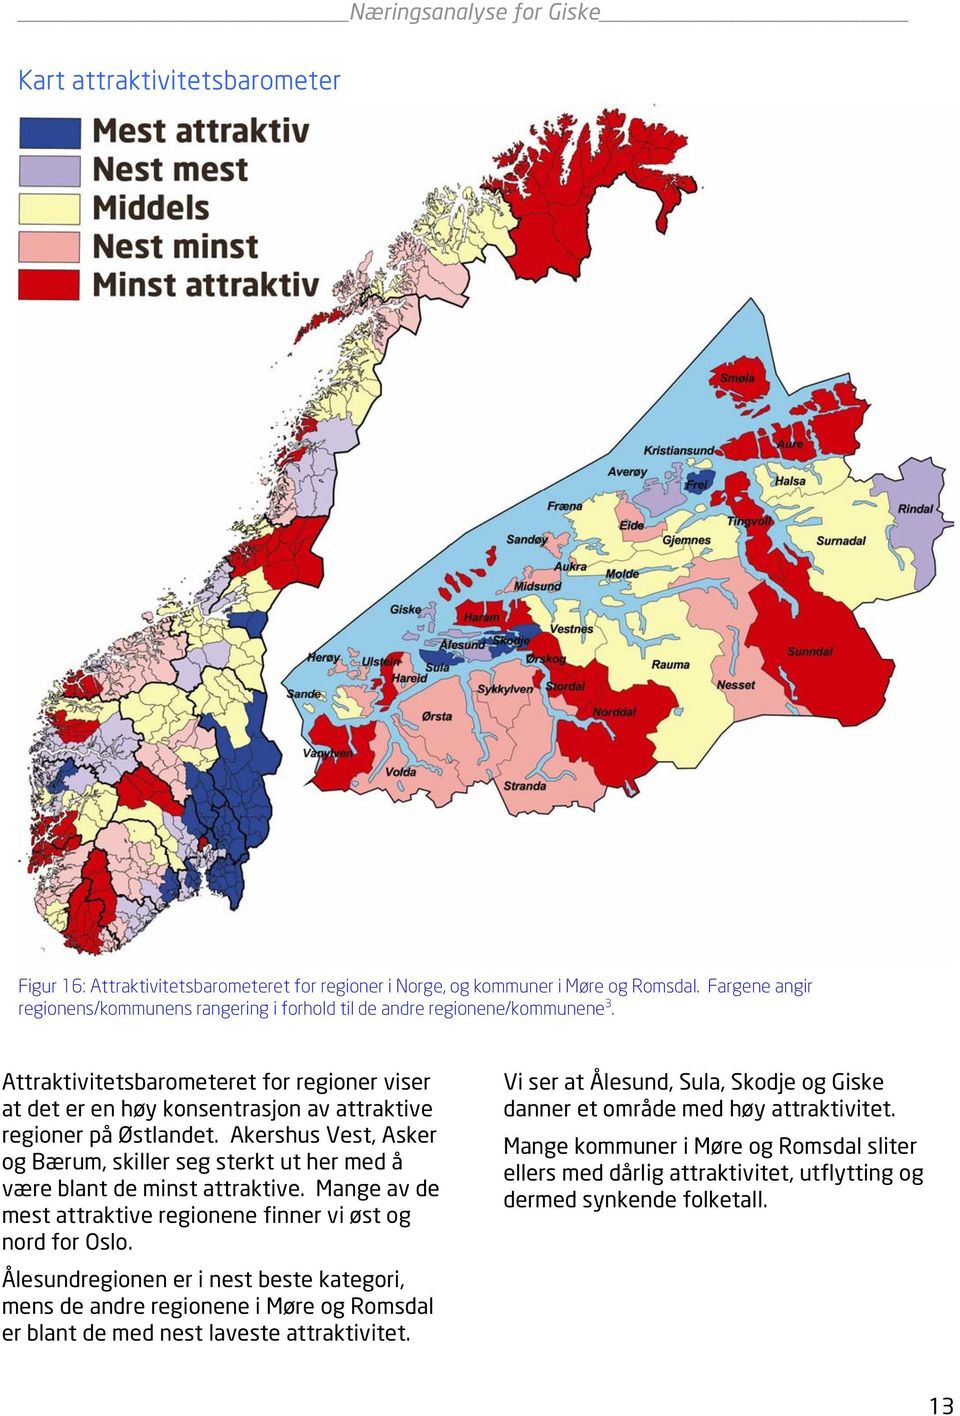 Attraktivitetsbarometeret for regioner viser at det er en høy konsentrasjon av attraktive regioner på Østlandet.